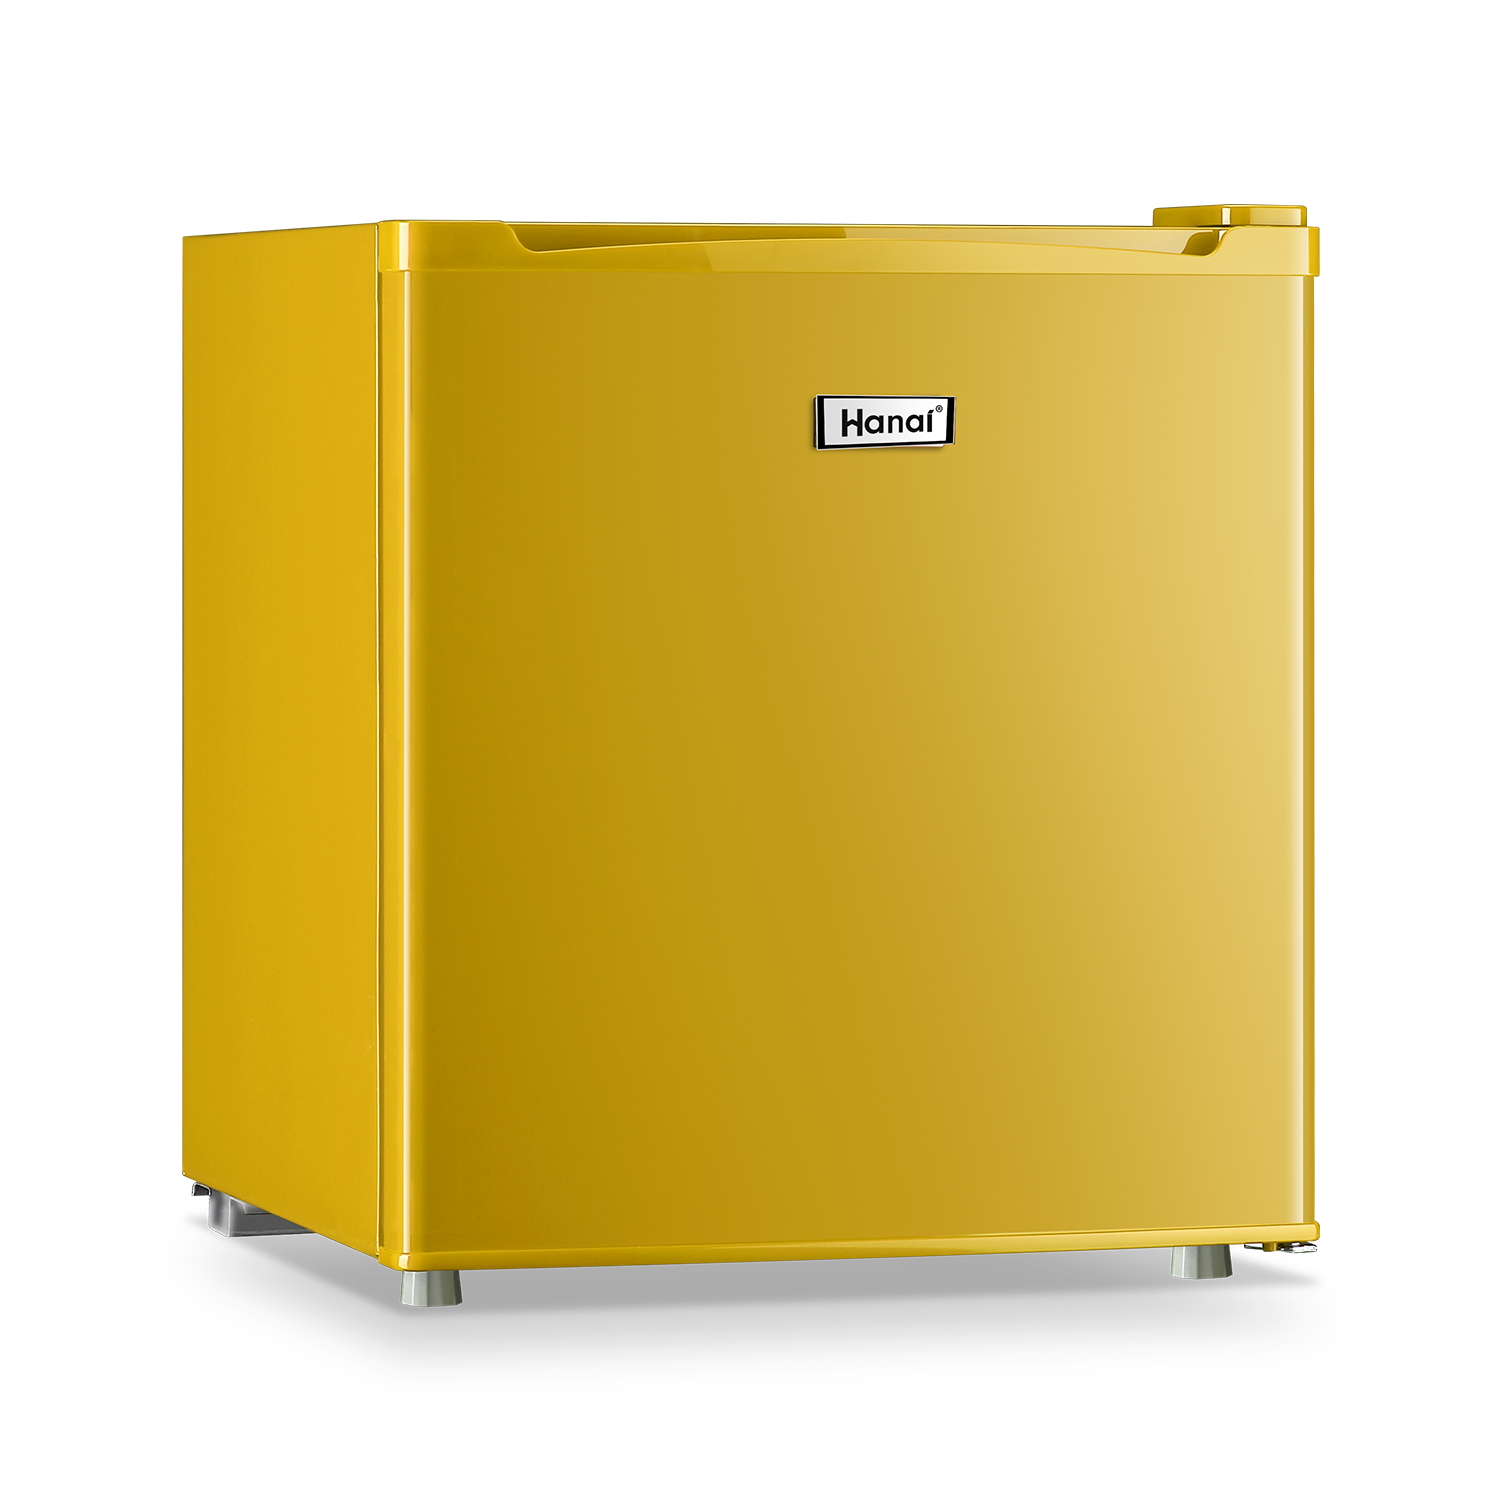 WANAI compact refrigerator, classic retro refrigerator, single door ...